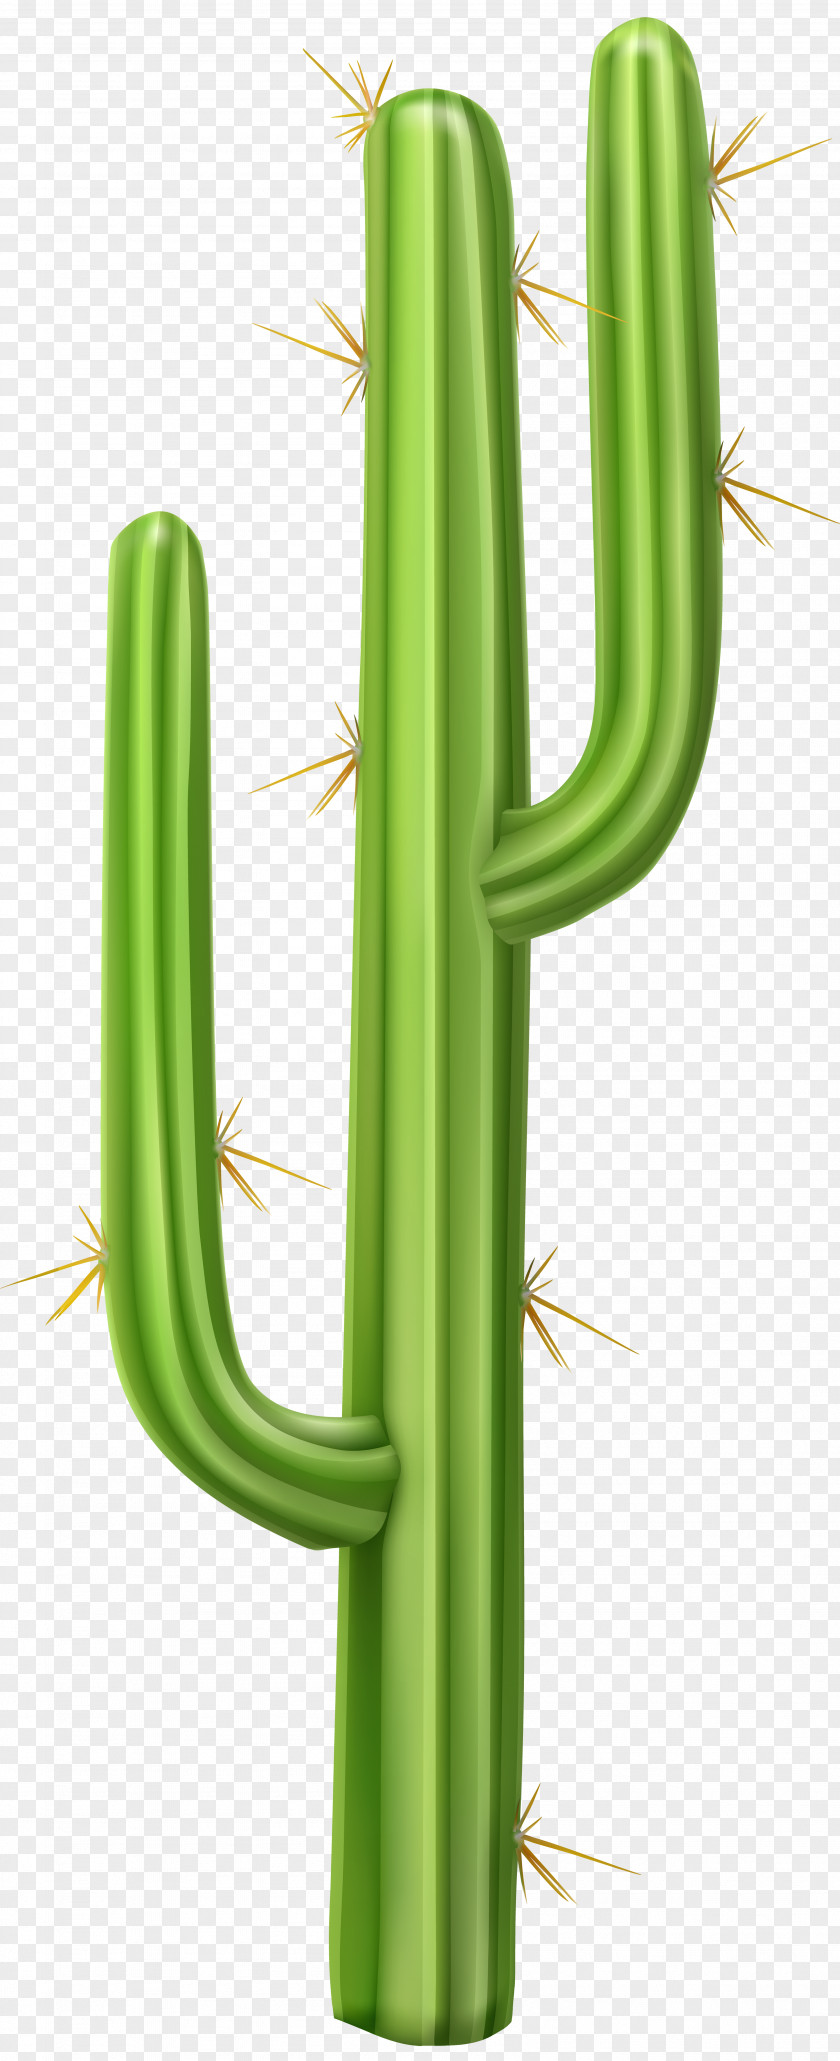 Cactus Transparent Clip Art Image Computer File PNG